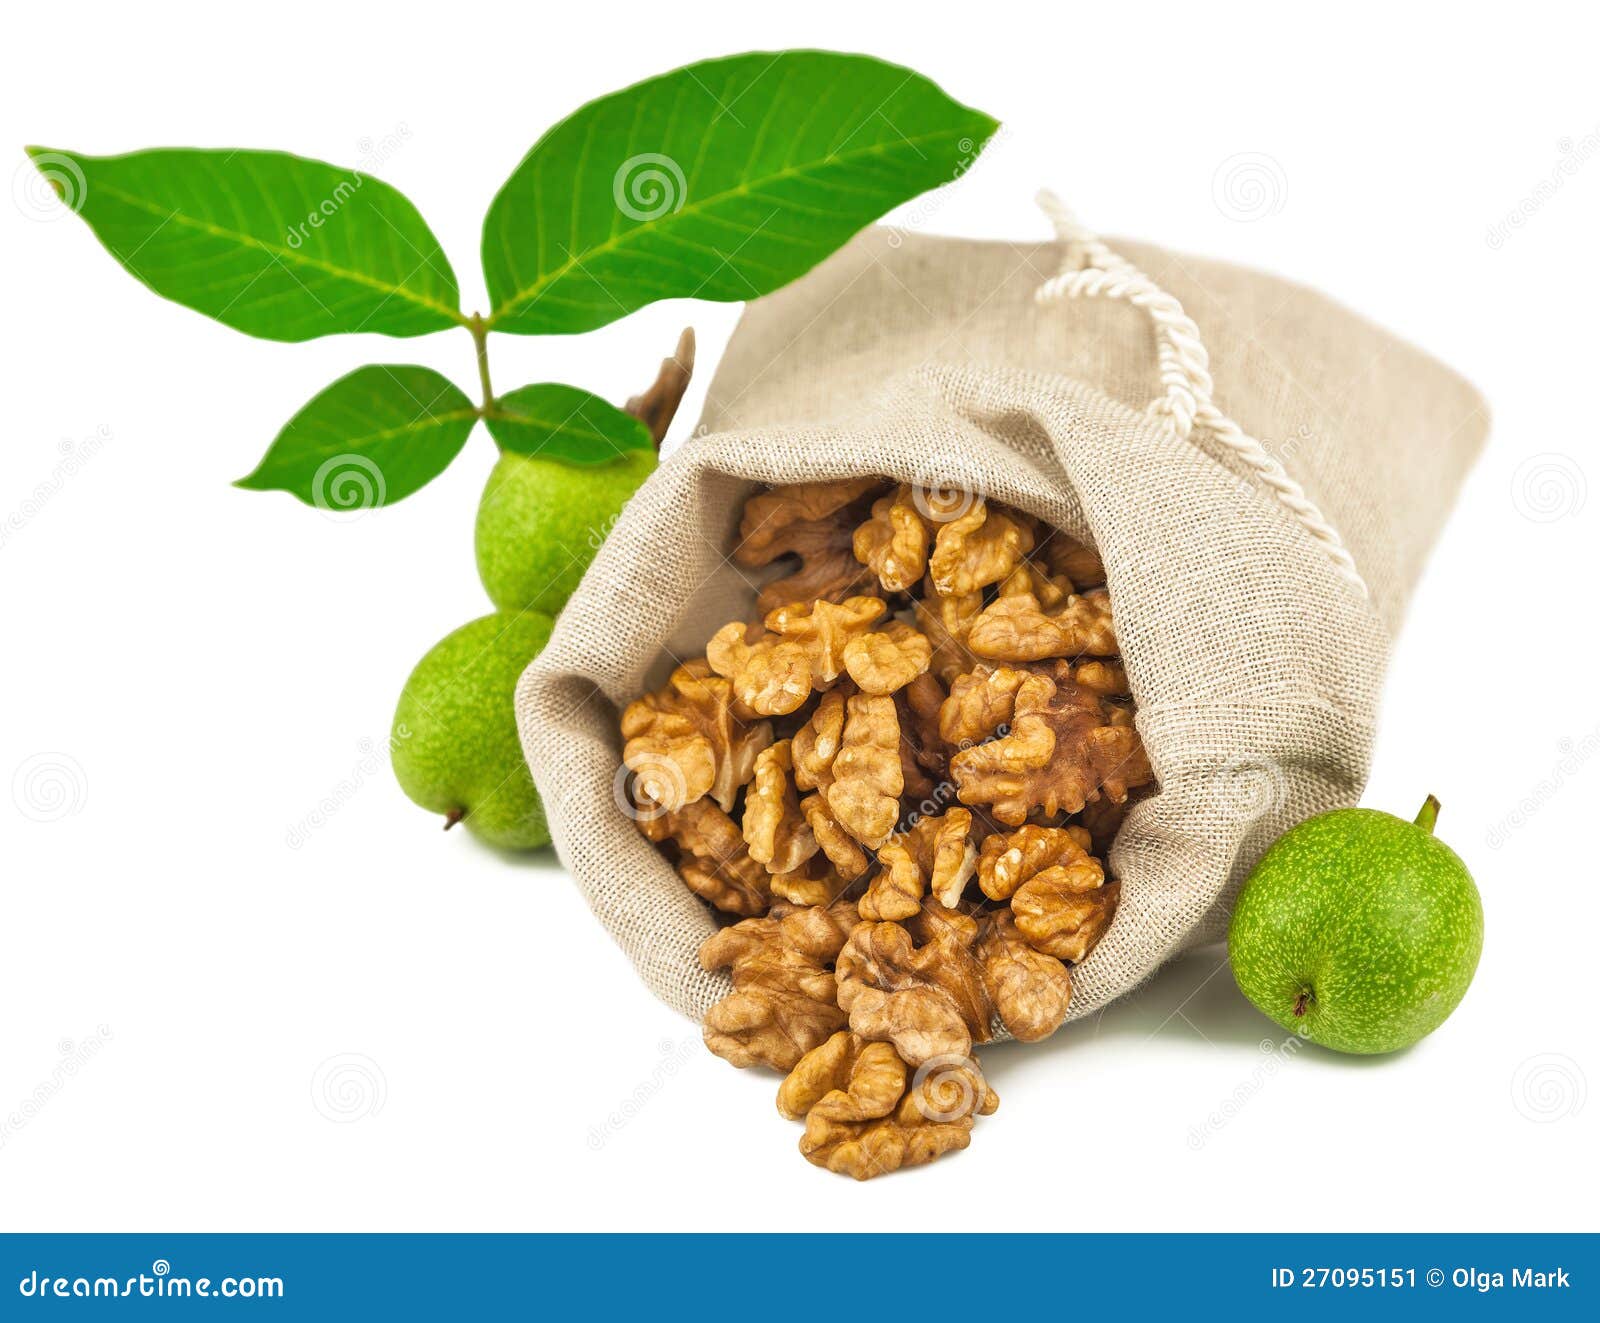 sack of purified walnut and green walnut fruit